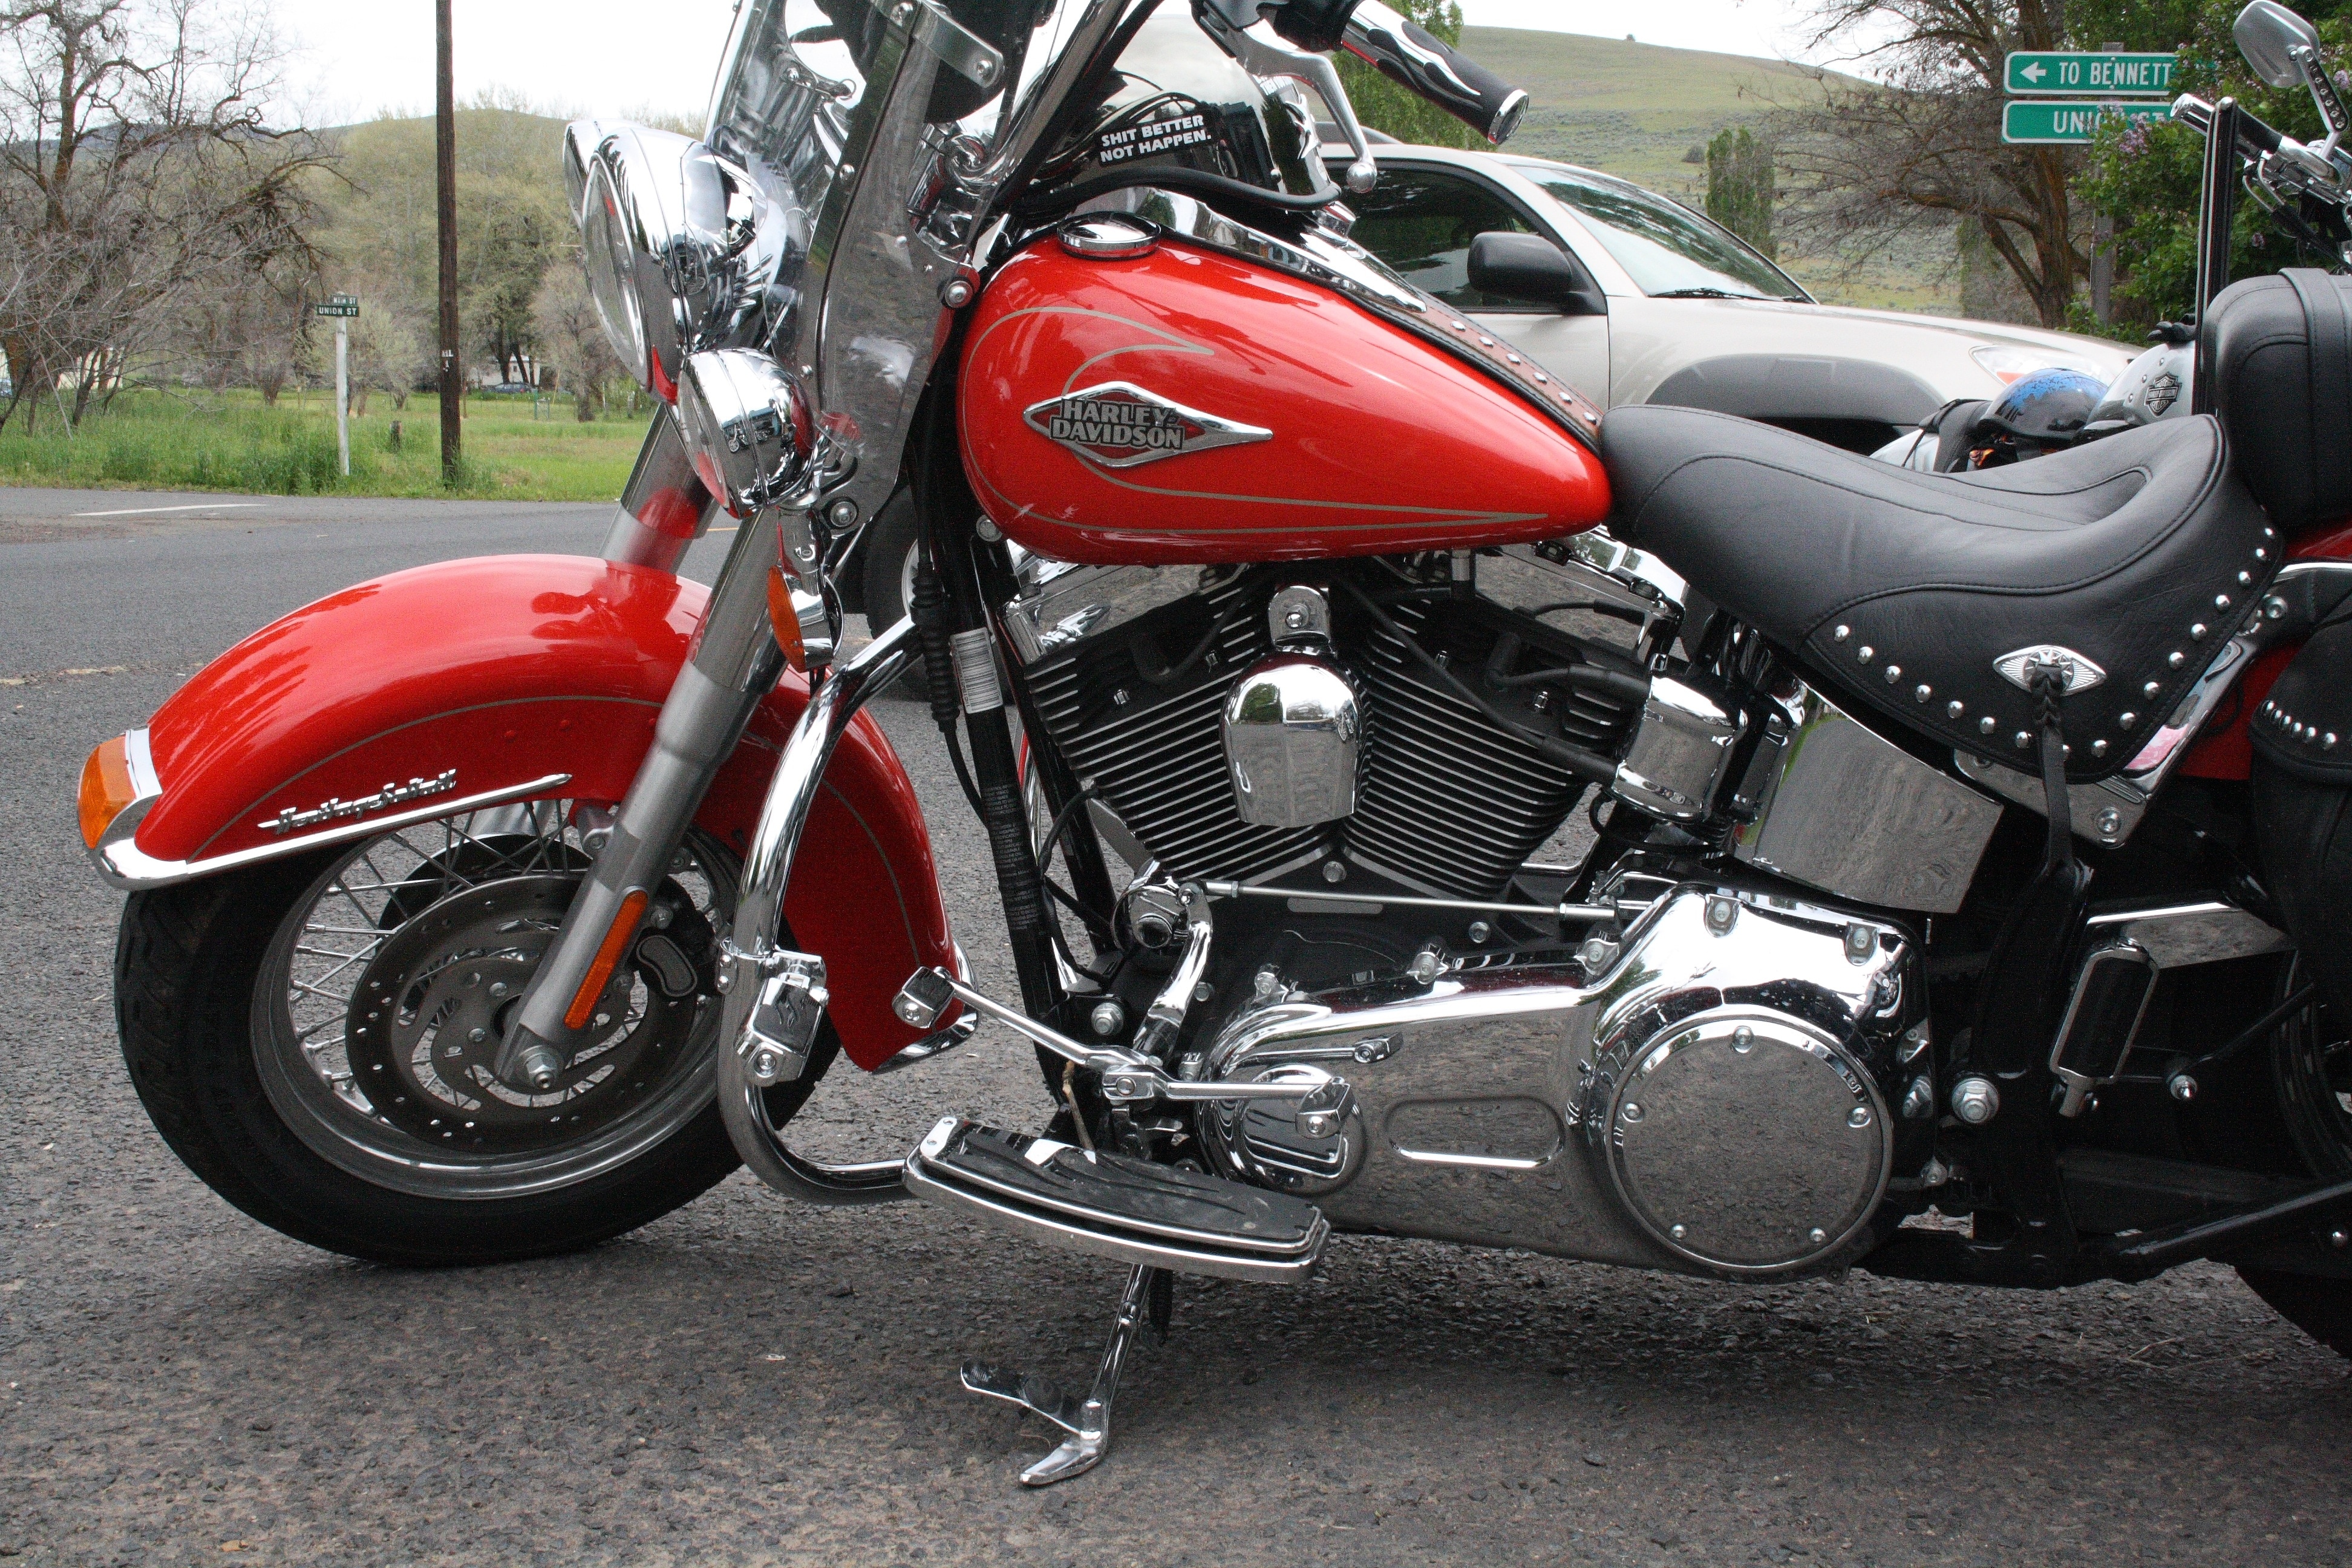 red and black harley davidson cruiser motorcycle